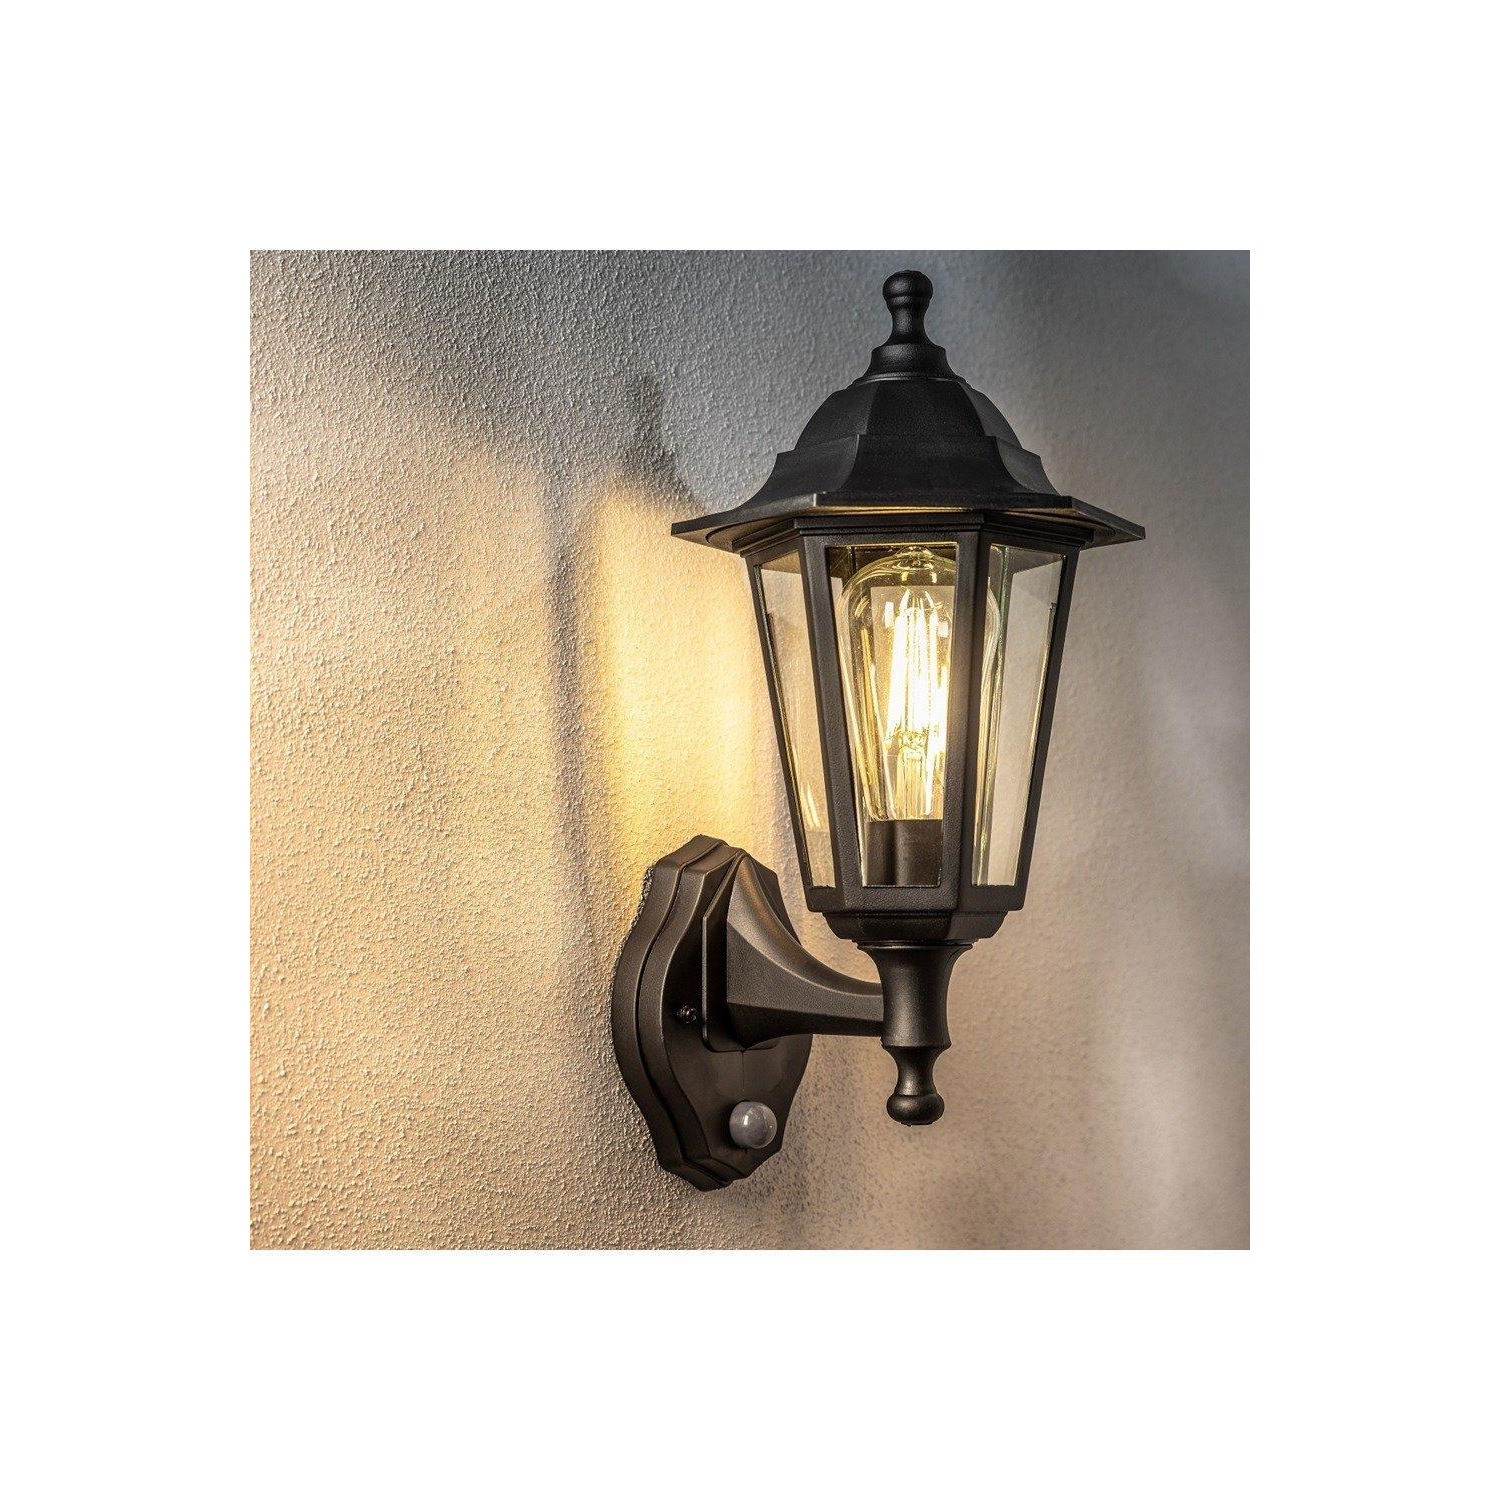 CGC Lighting 'Yasmin' Black Outdoor Traditional Lantern Style Wall Light With Motion Sensor - image 1